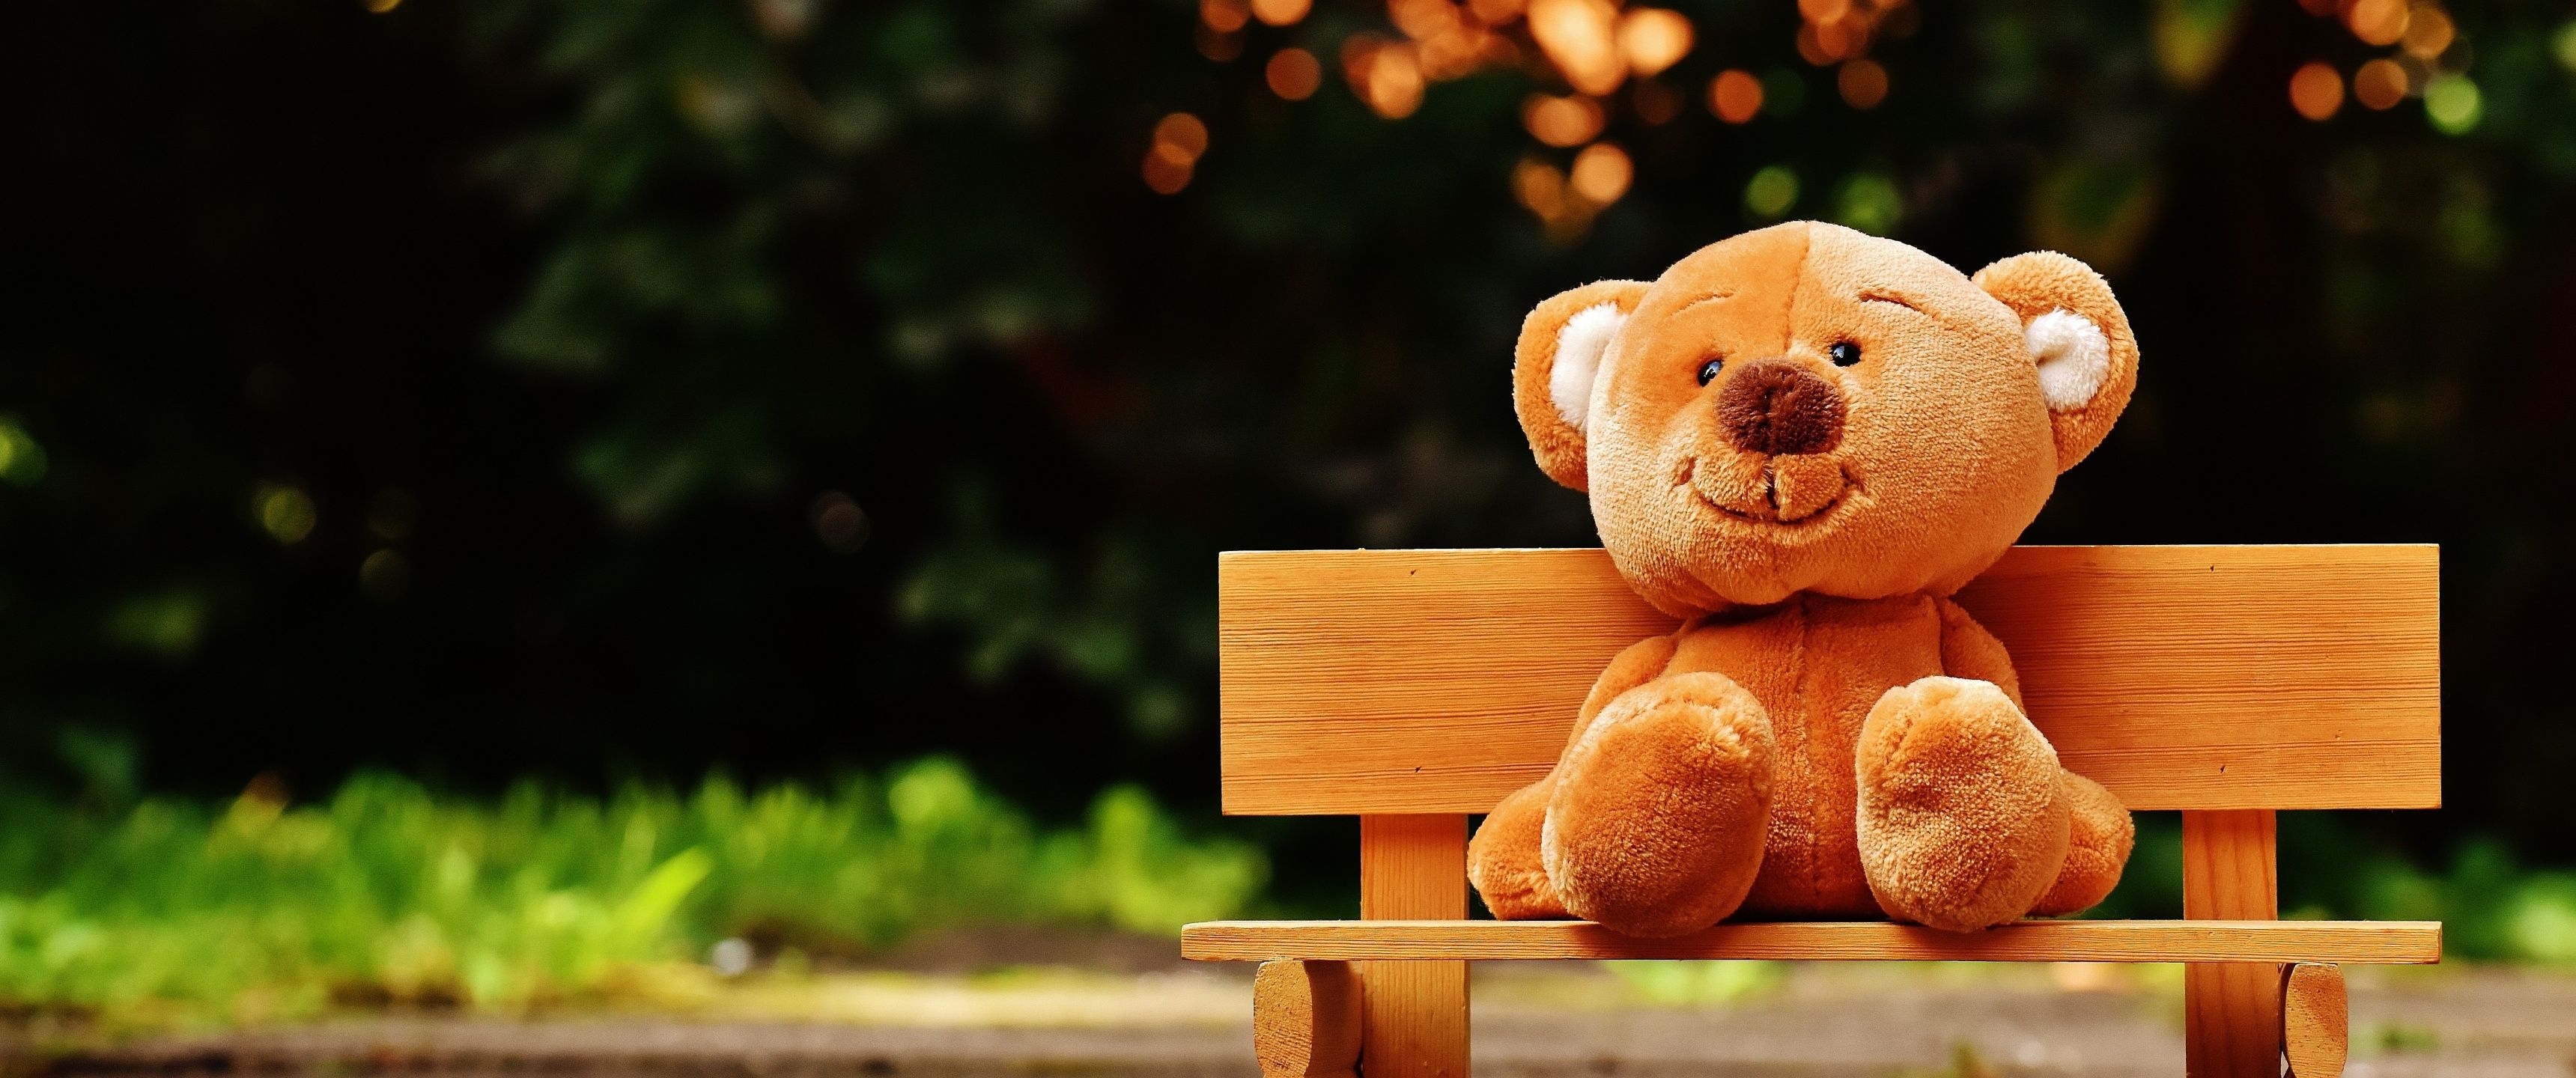 A stuffed bear sitting on top of wooden bench - Teddy bear